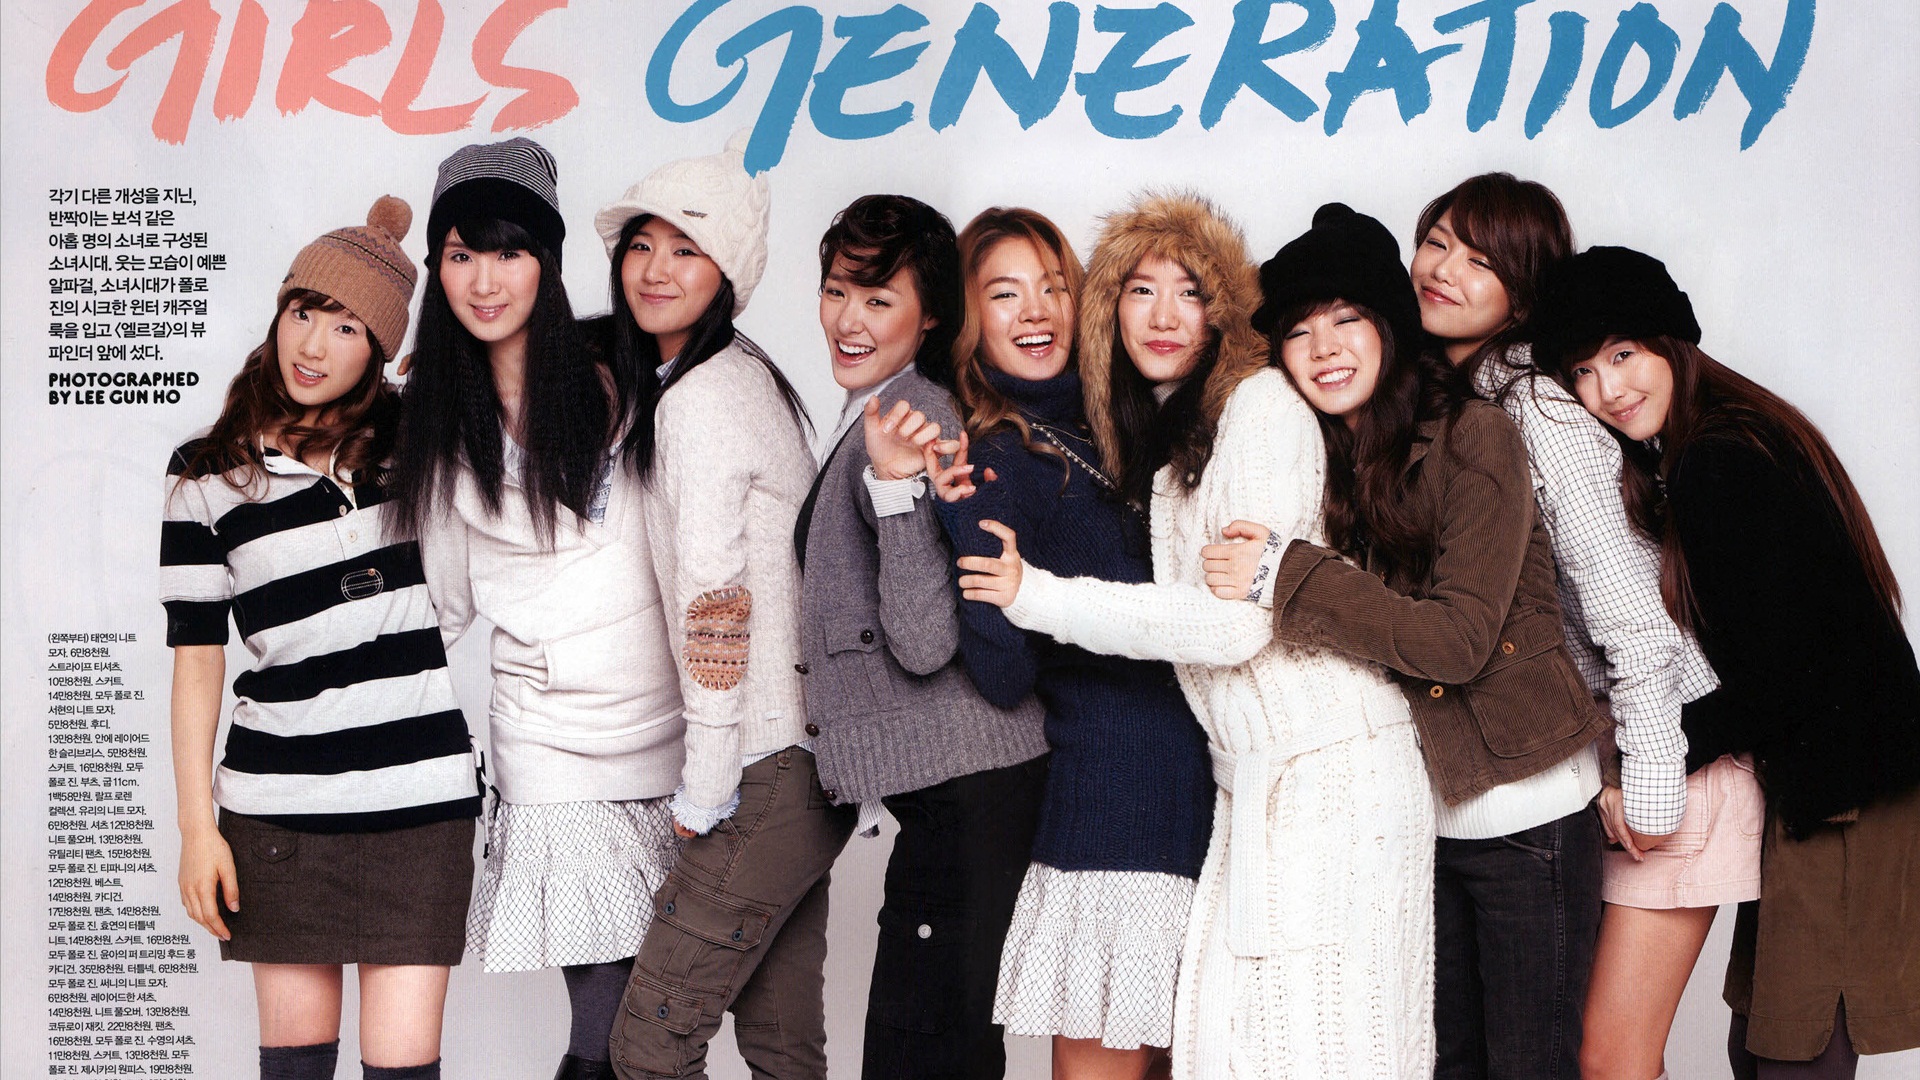 Girls Generation neuesten HD Wallpapers Collection #23 - 1920x1080